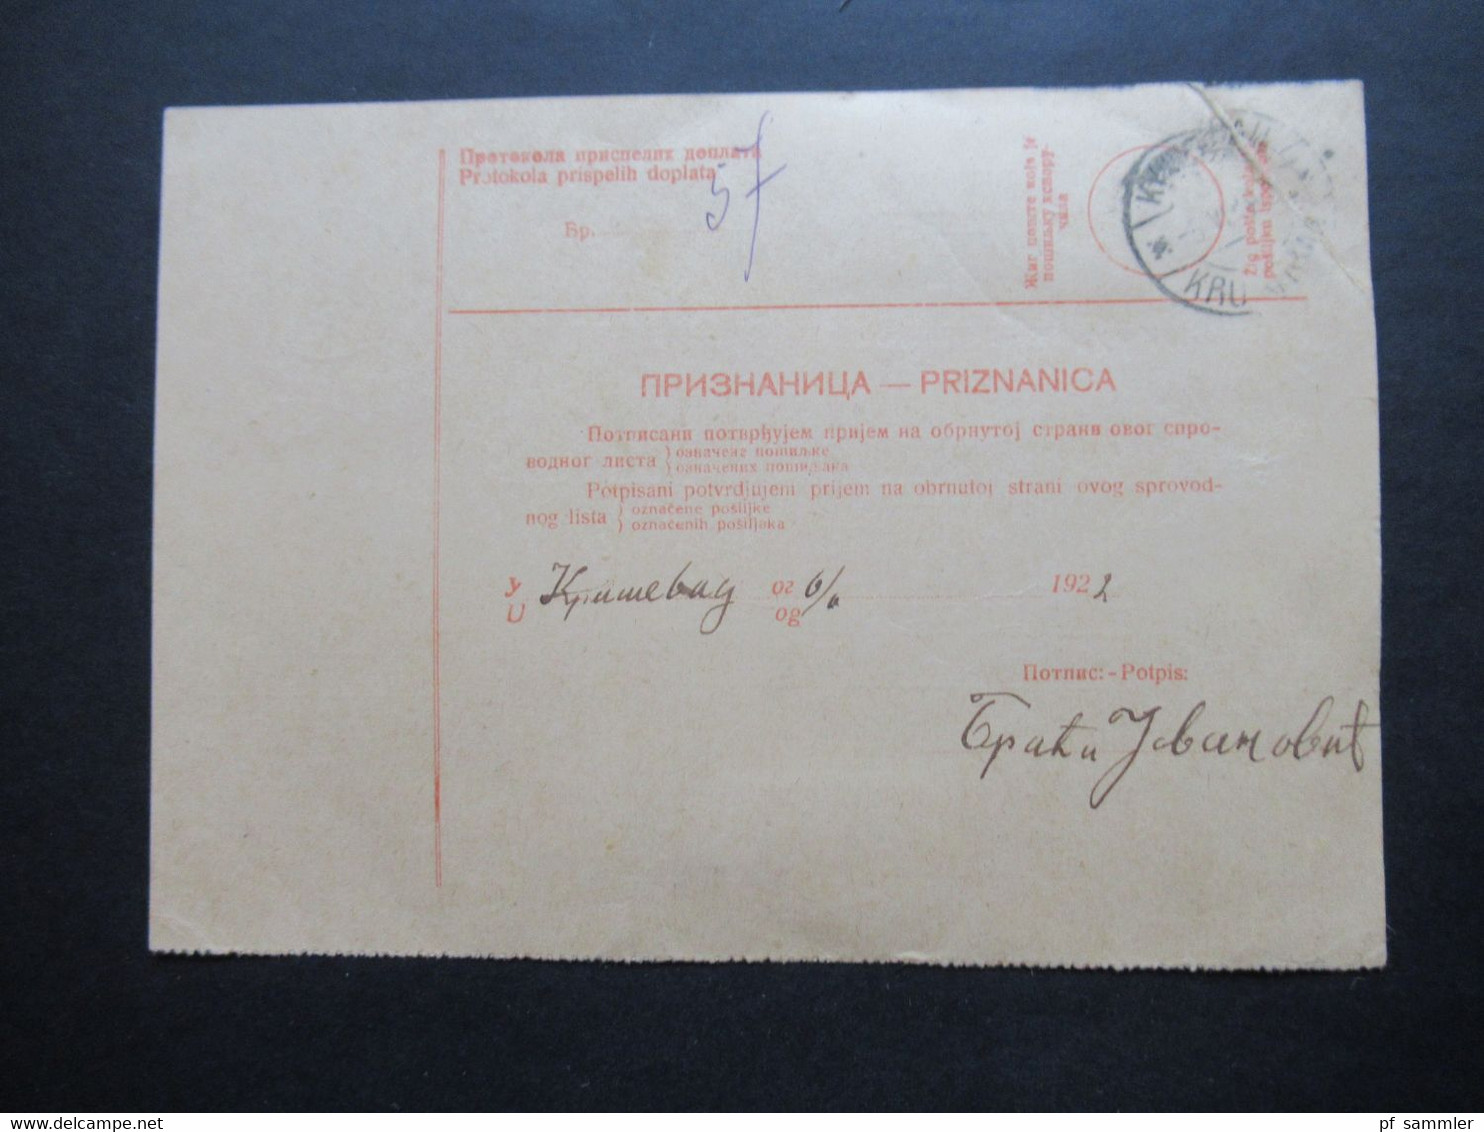 Jugoslawien SHS 1922 Paketkarte / Parcel Card Beograd / Belgrad mit Freimarken Inschrift Kraljevstvo